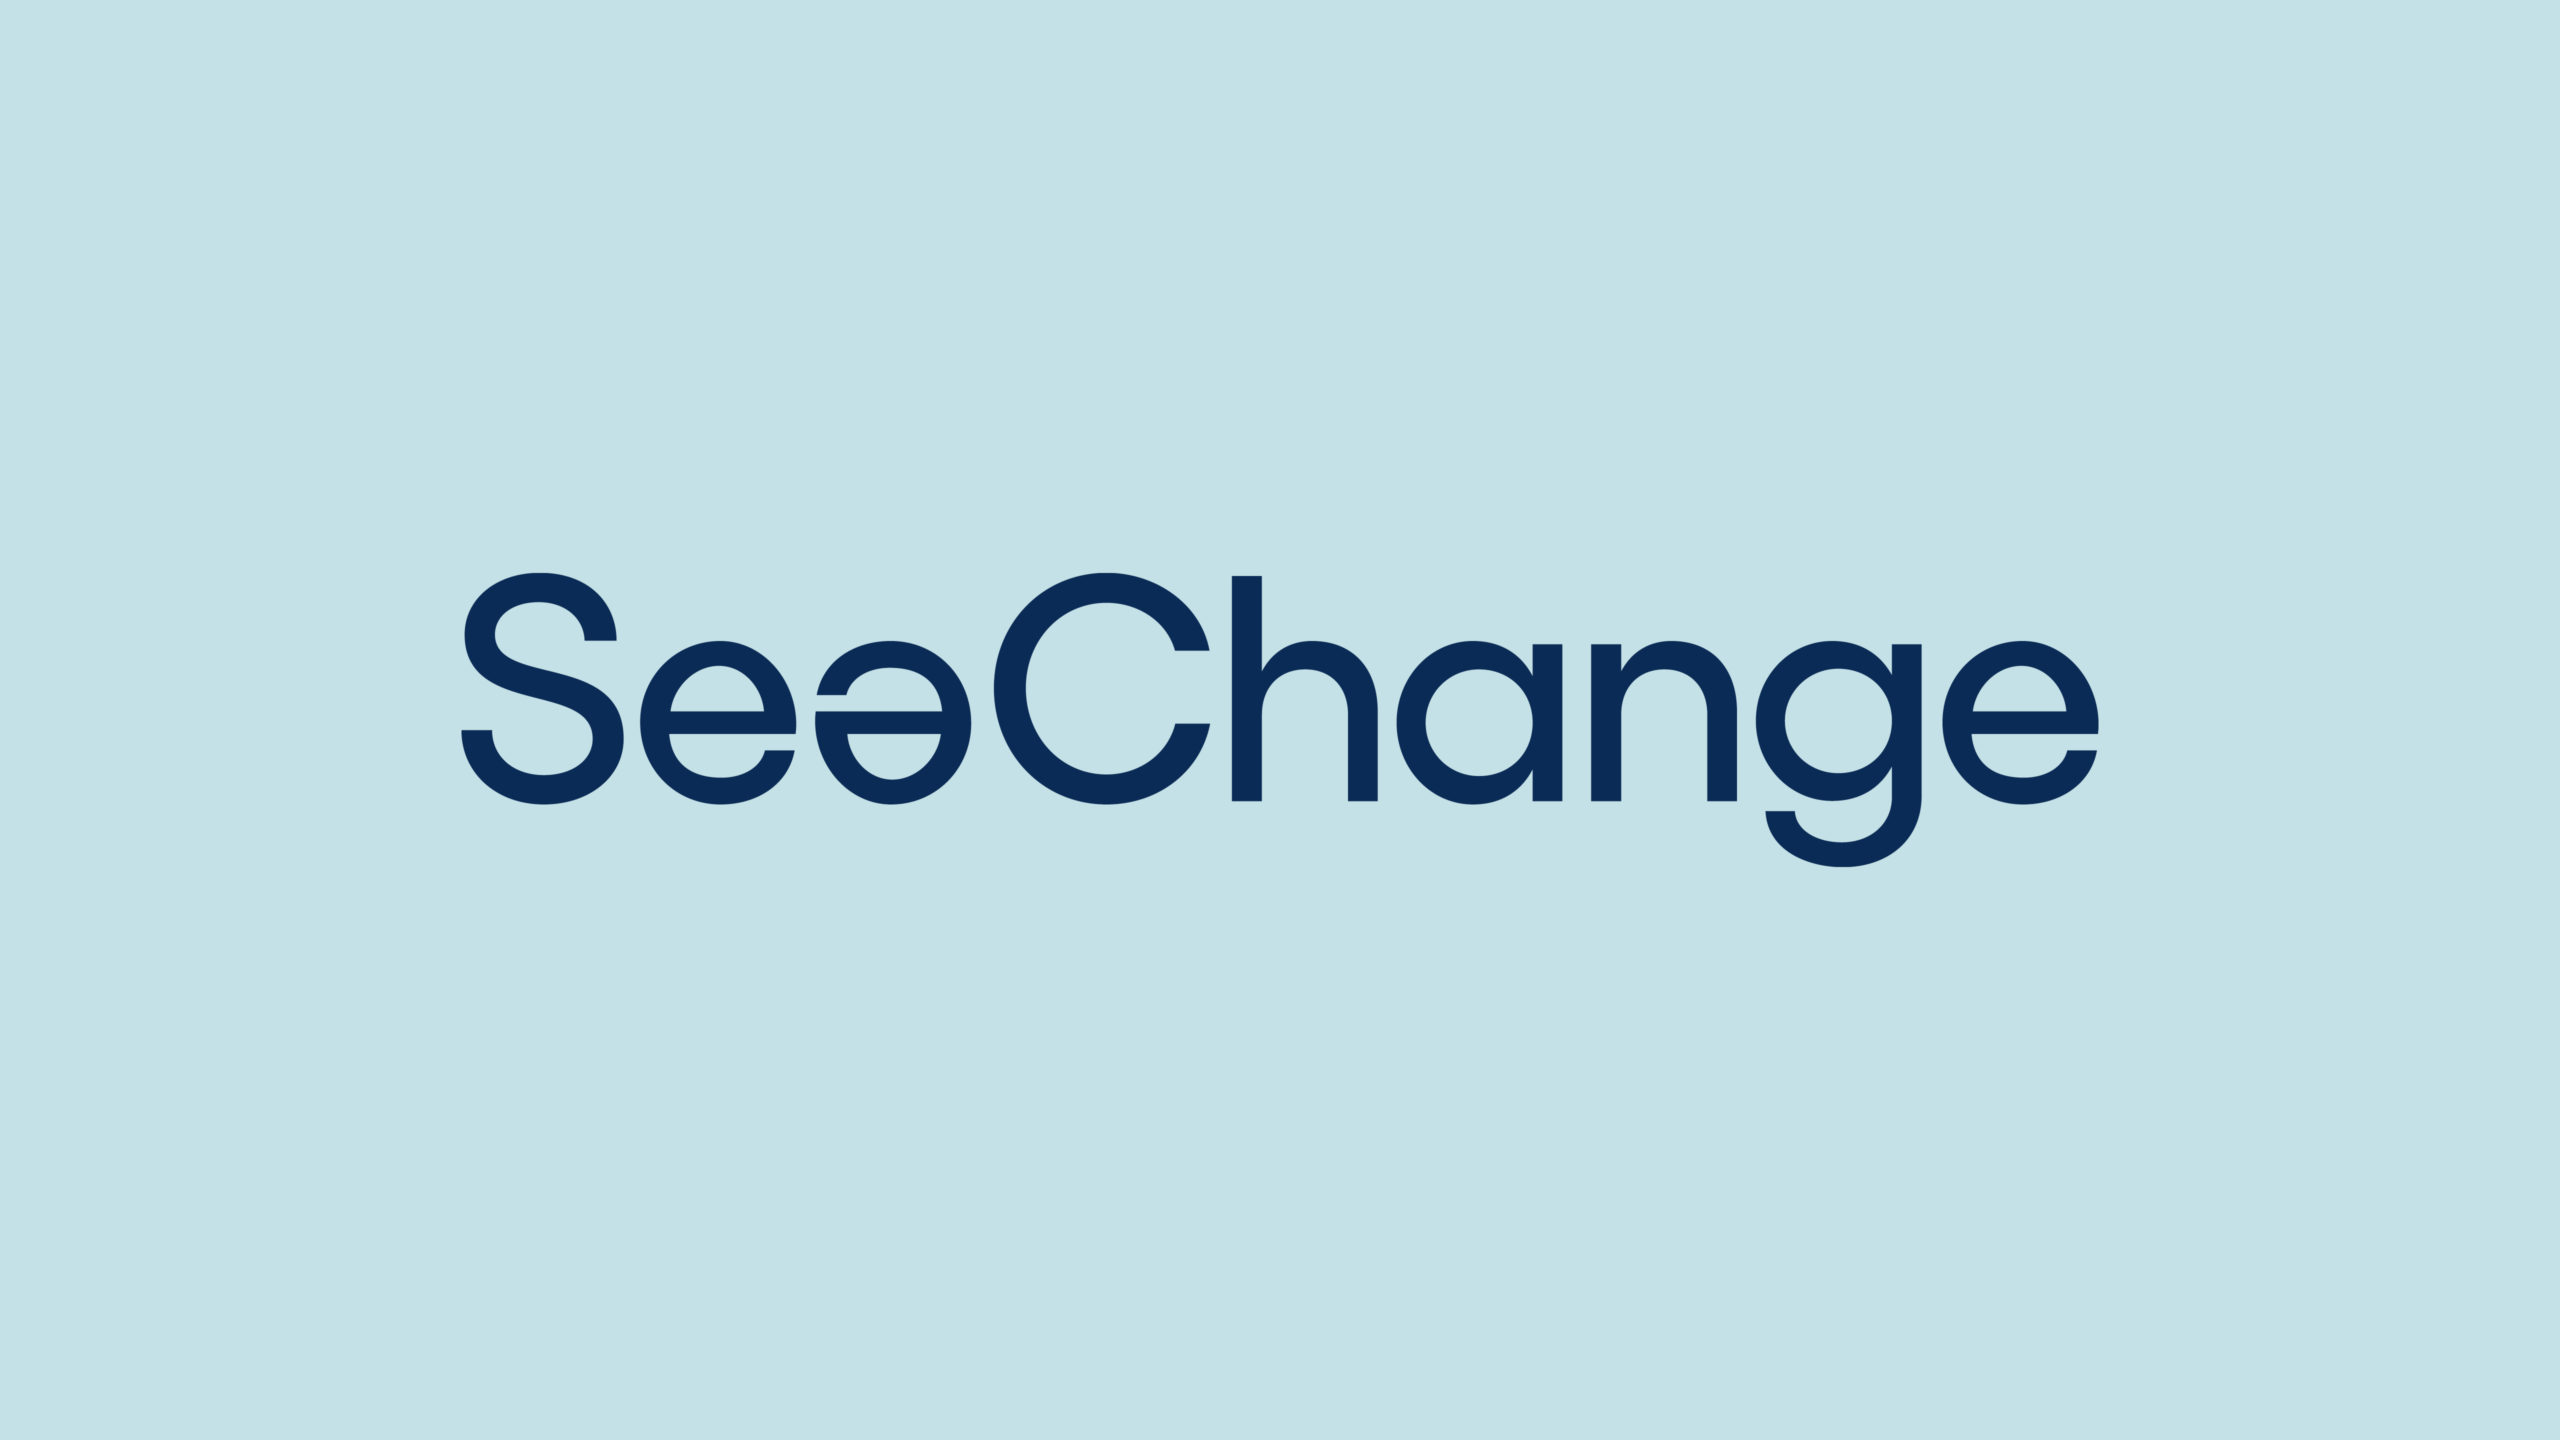 SeeChange: A Paradigm Shift